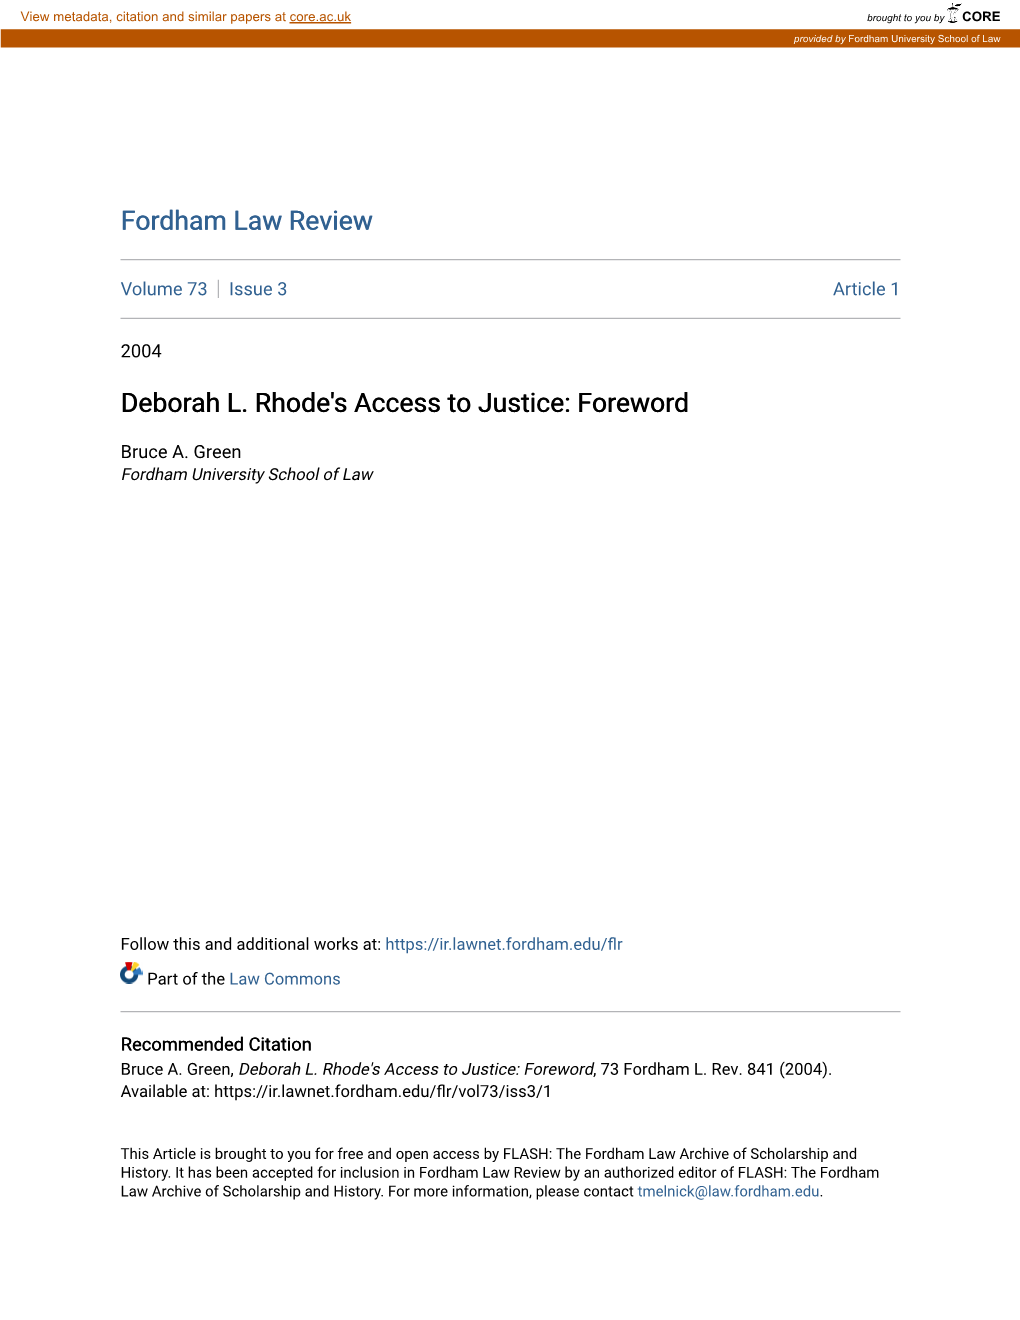 Deborah L. Rhode's Access to Justice: Foreword